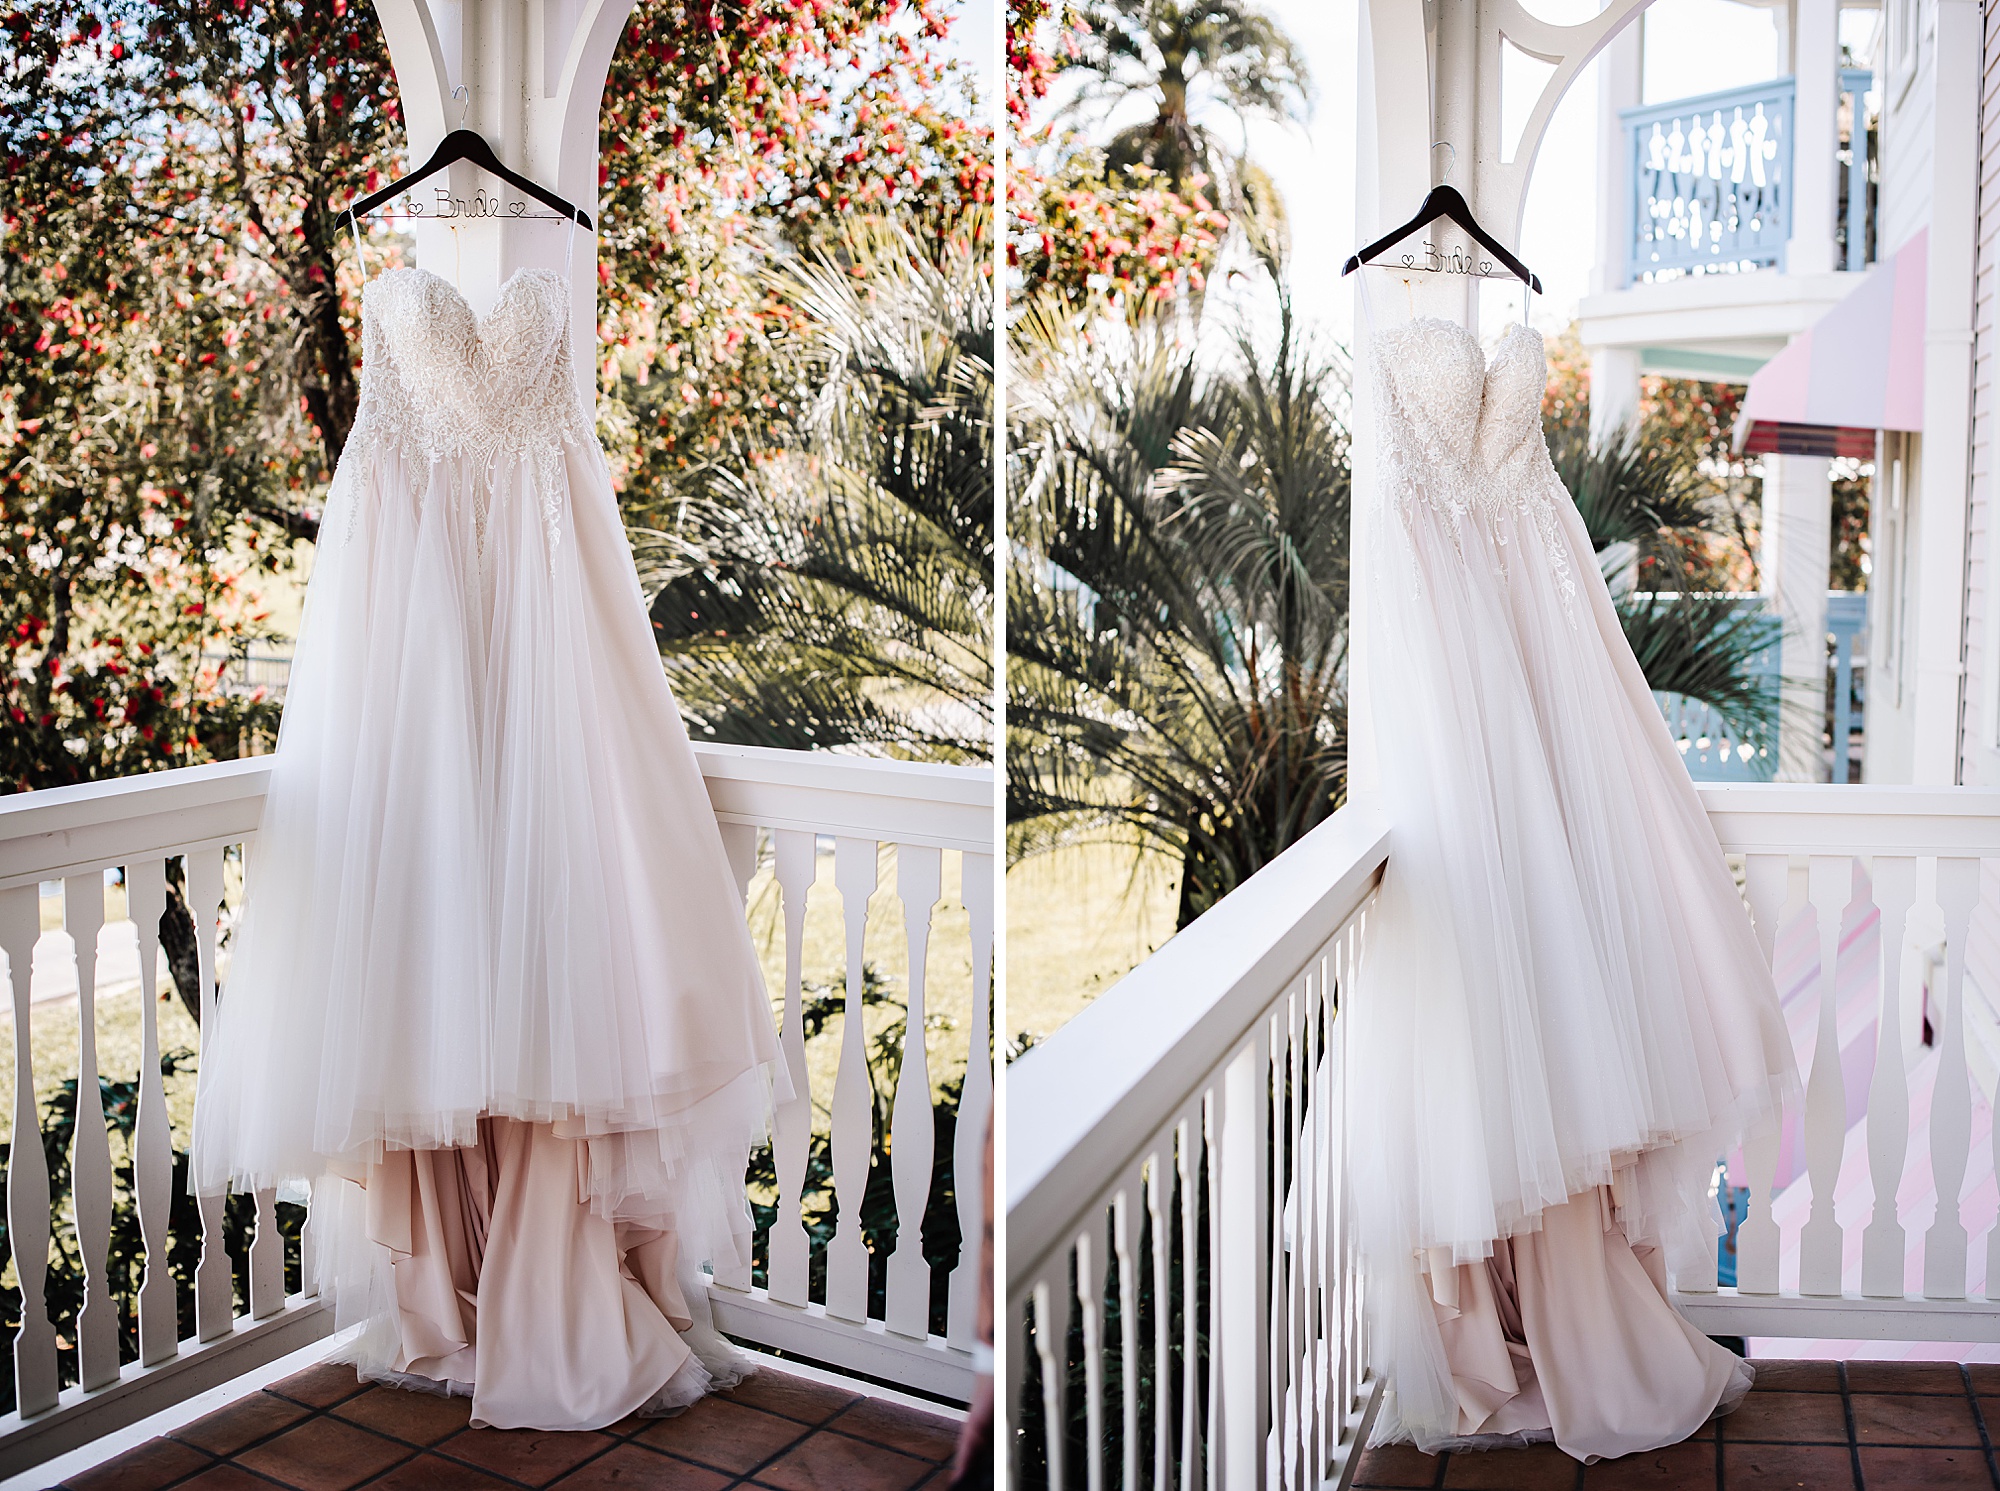 brides dress hanging on balcony